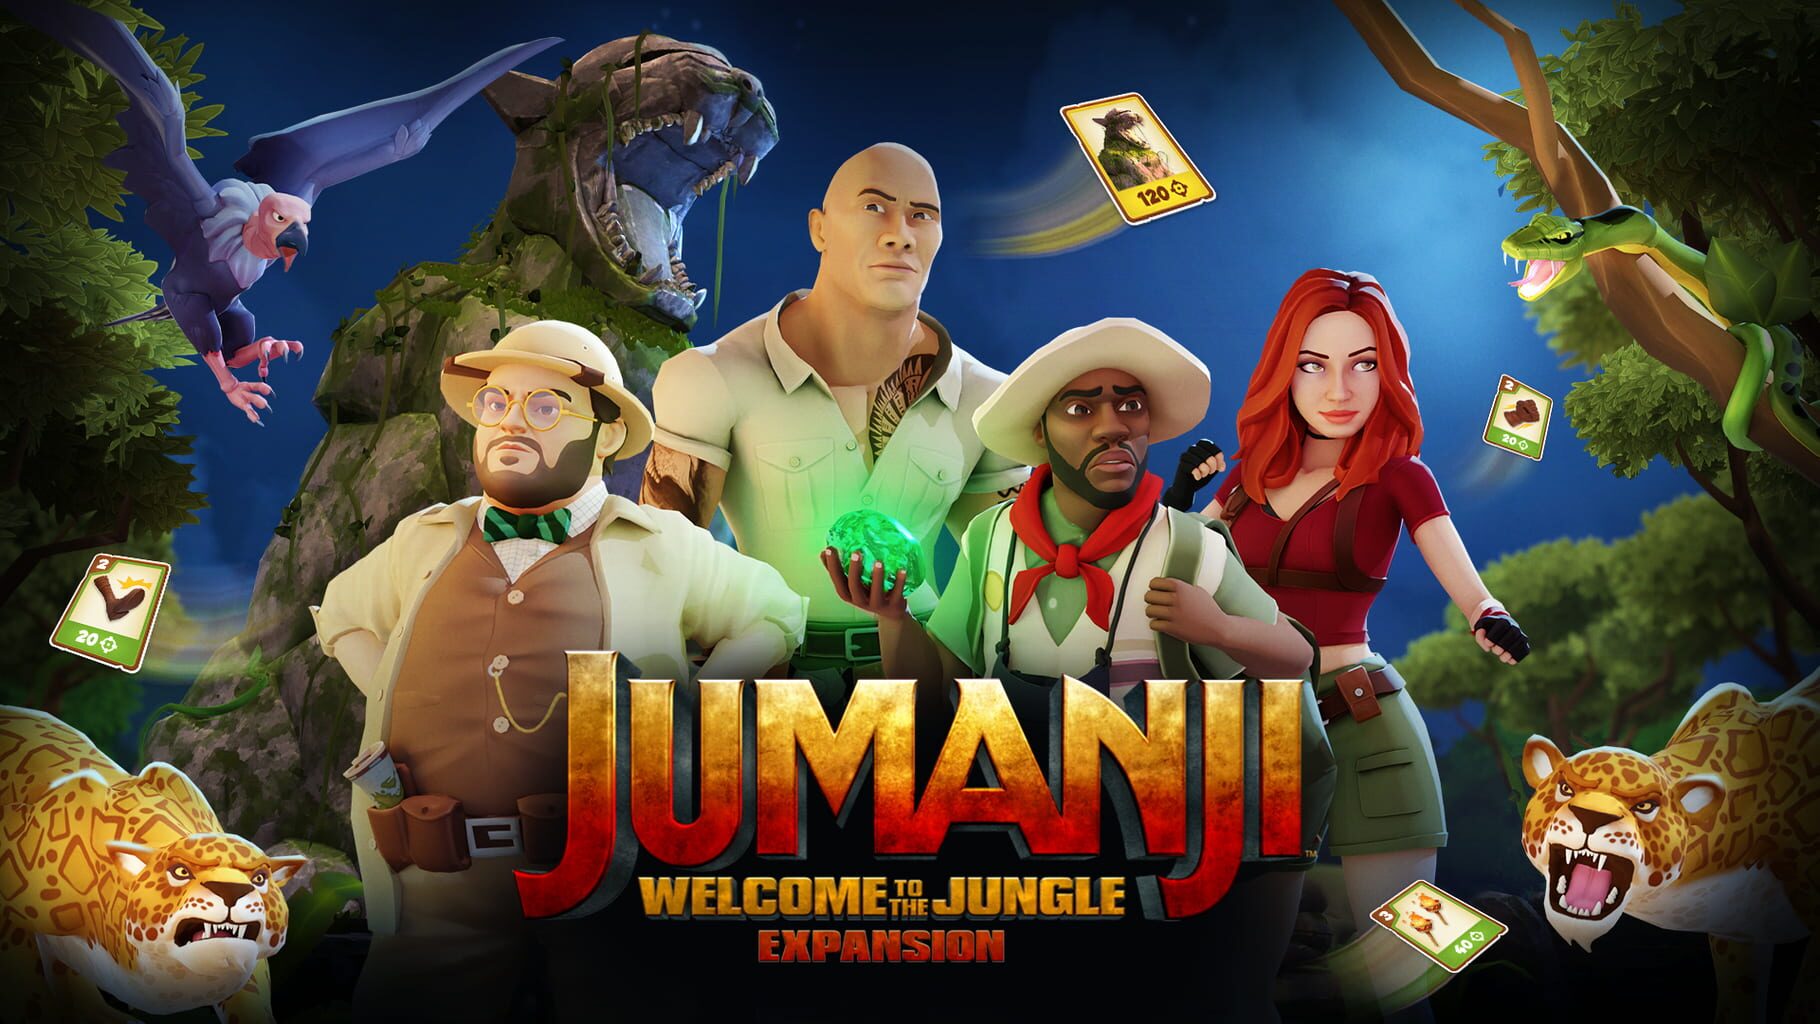 Arte - Jumanji: The Curse Returns - Welcome to the Jungle